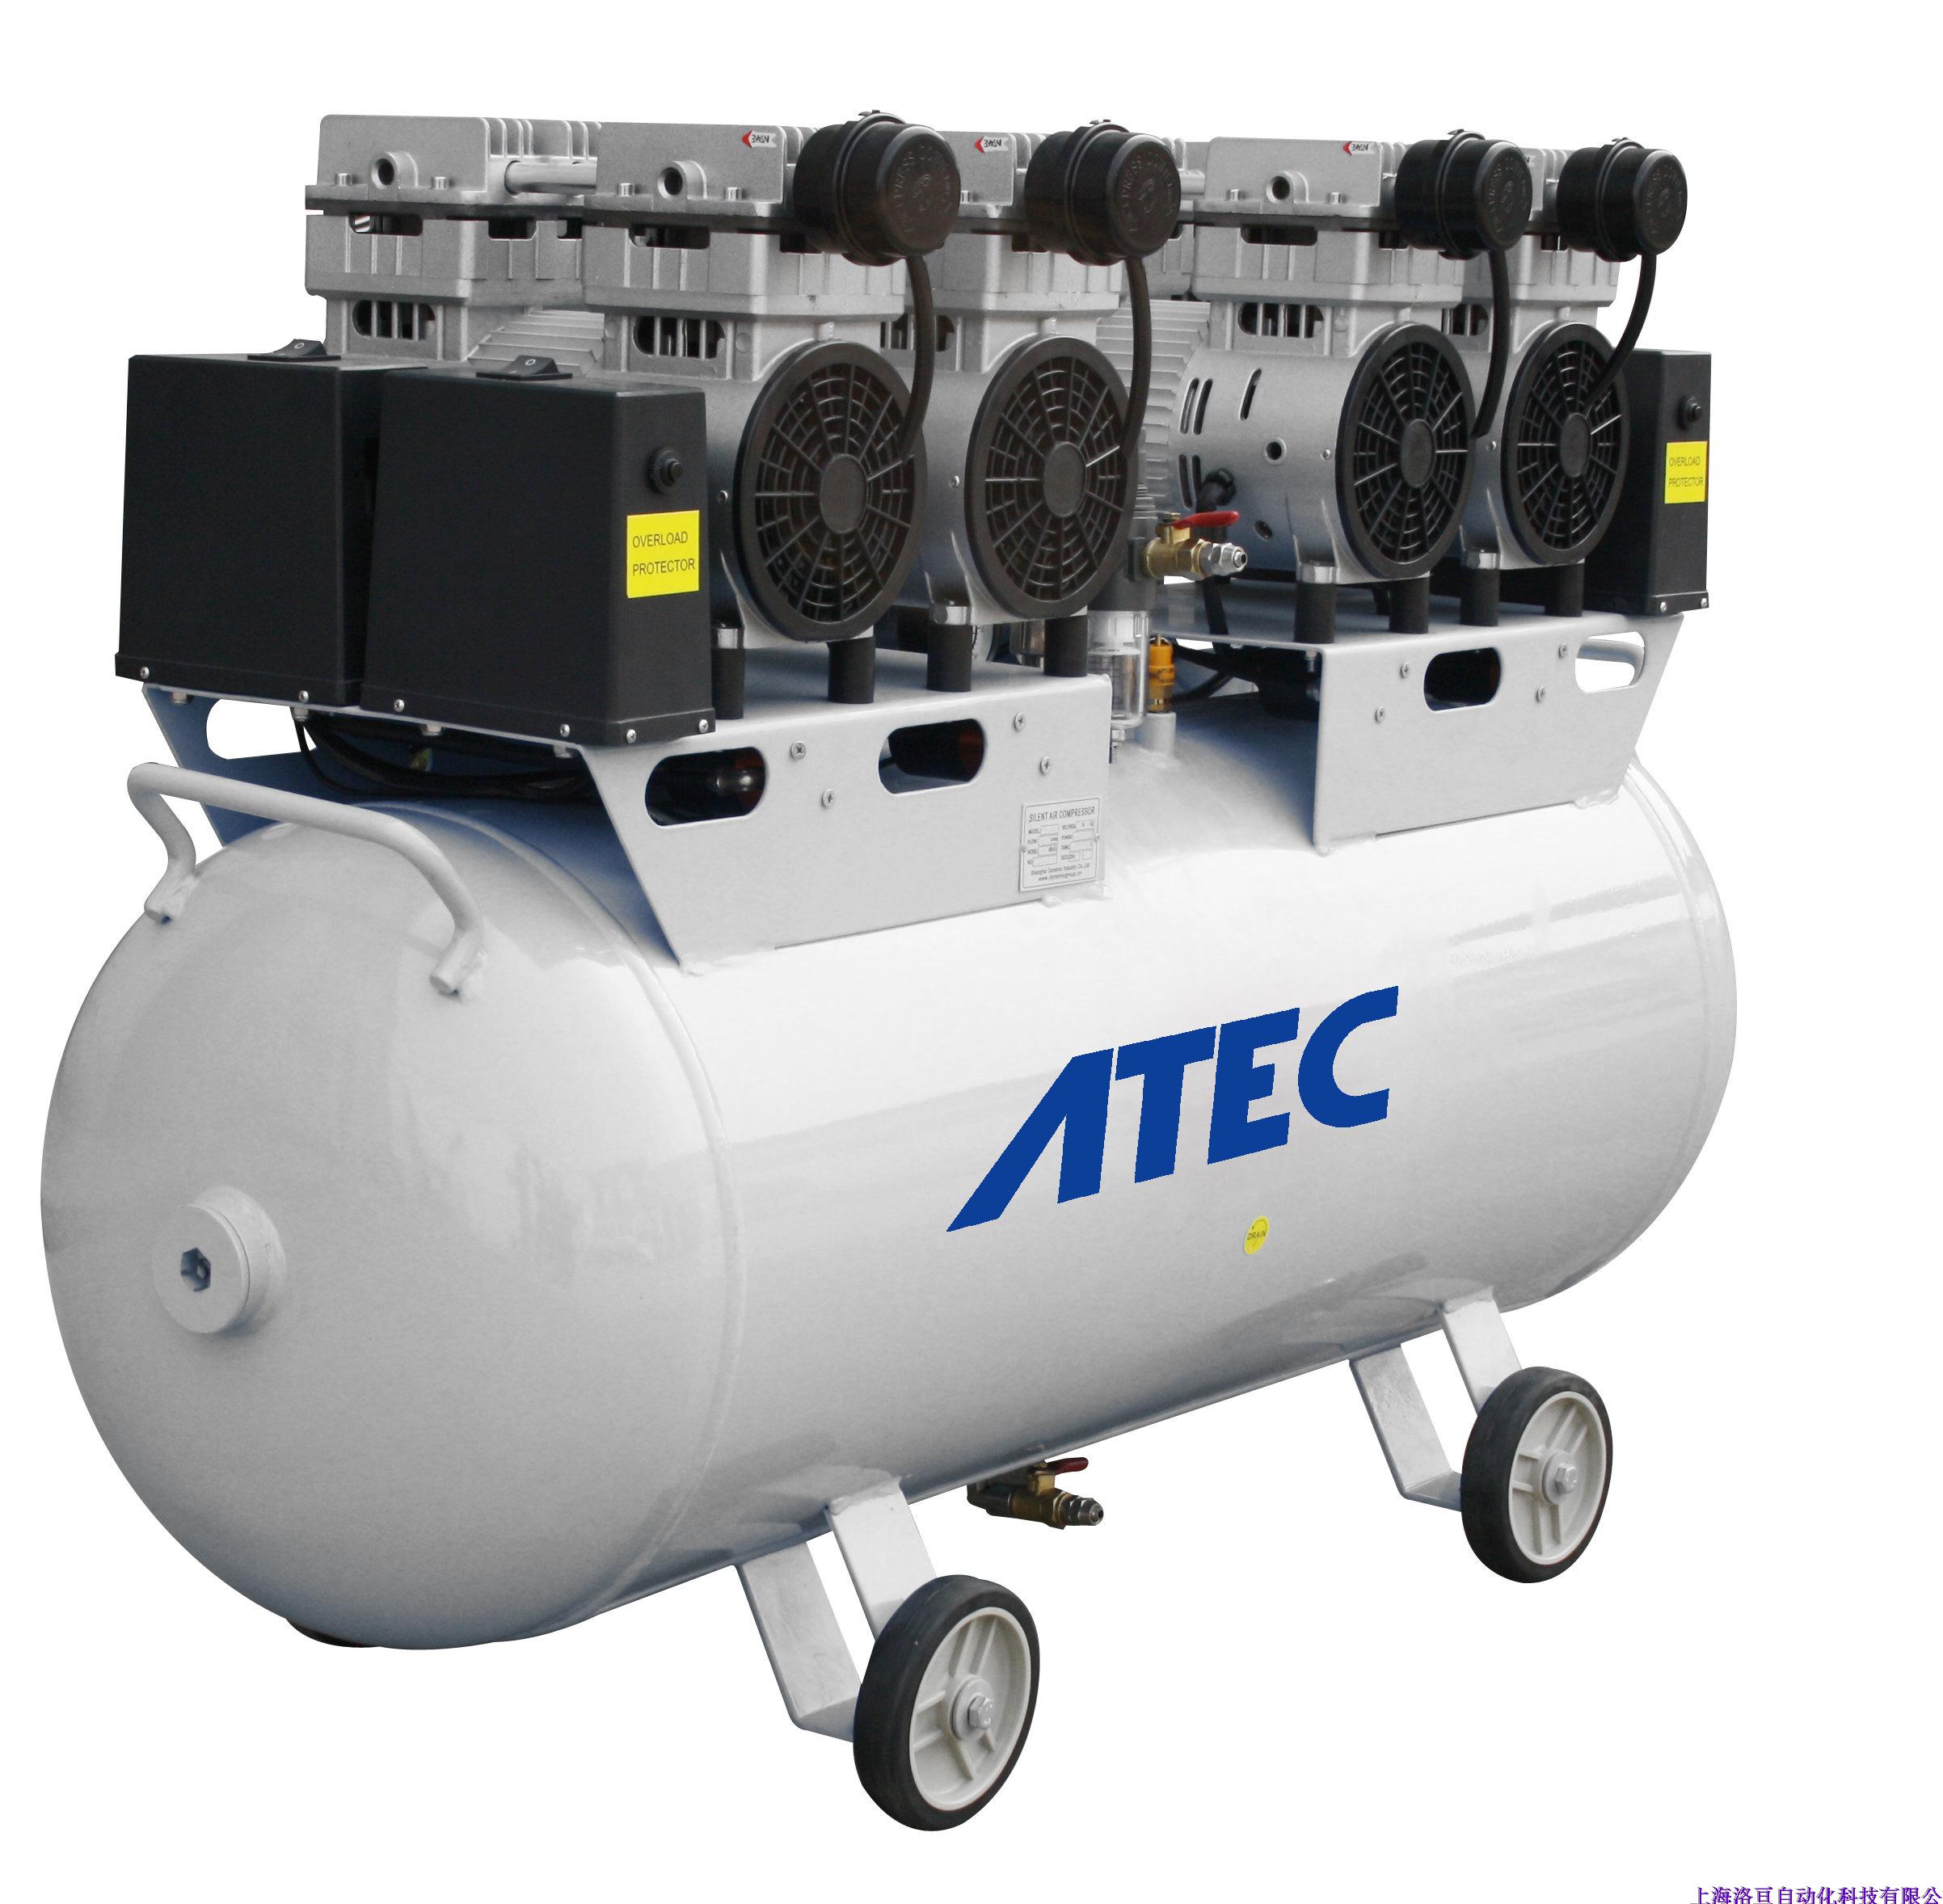 ATEC/翔创 静音无油空气压缩机 AT320/100